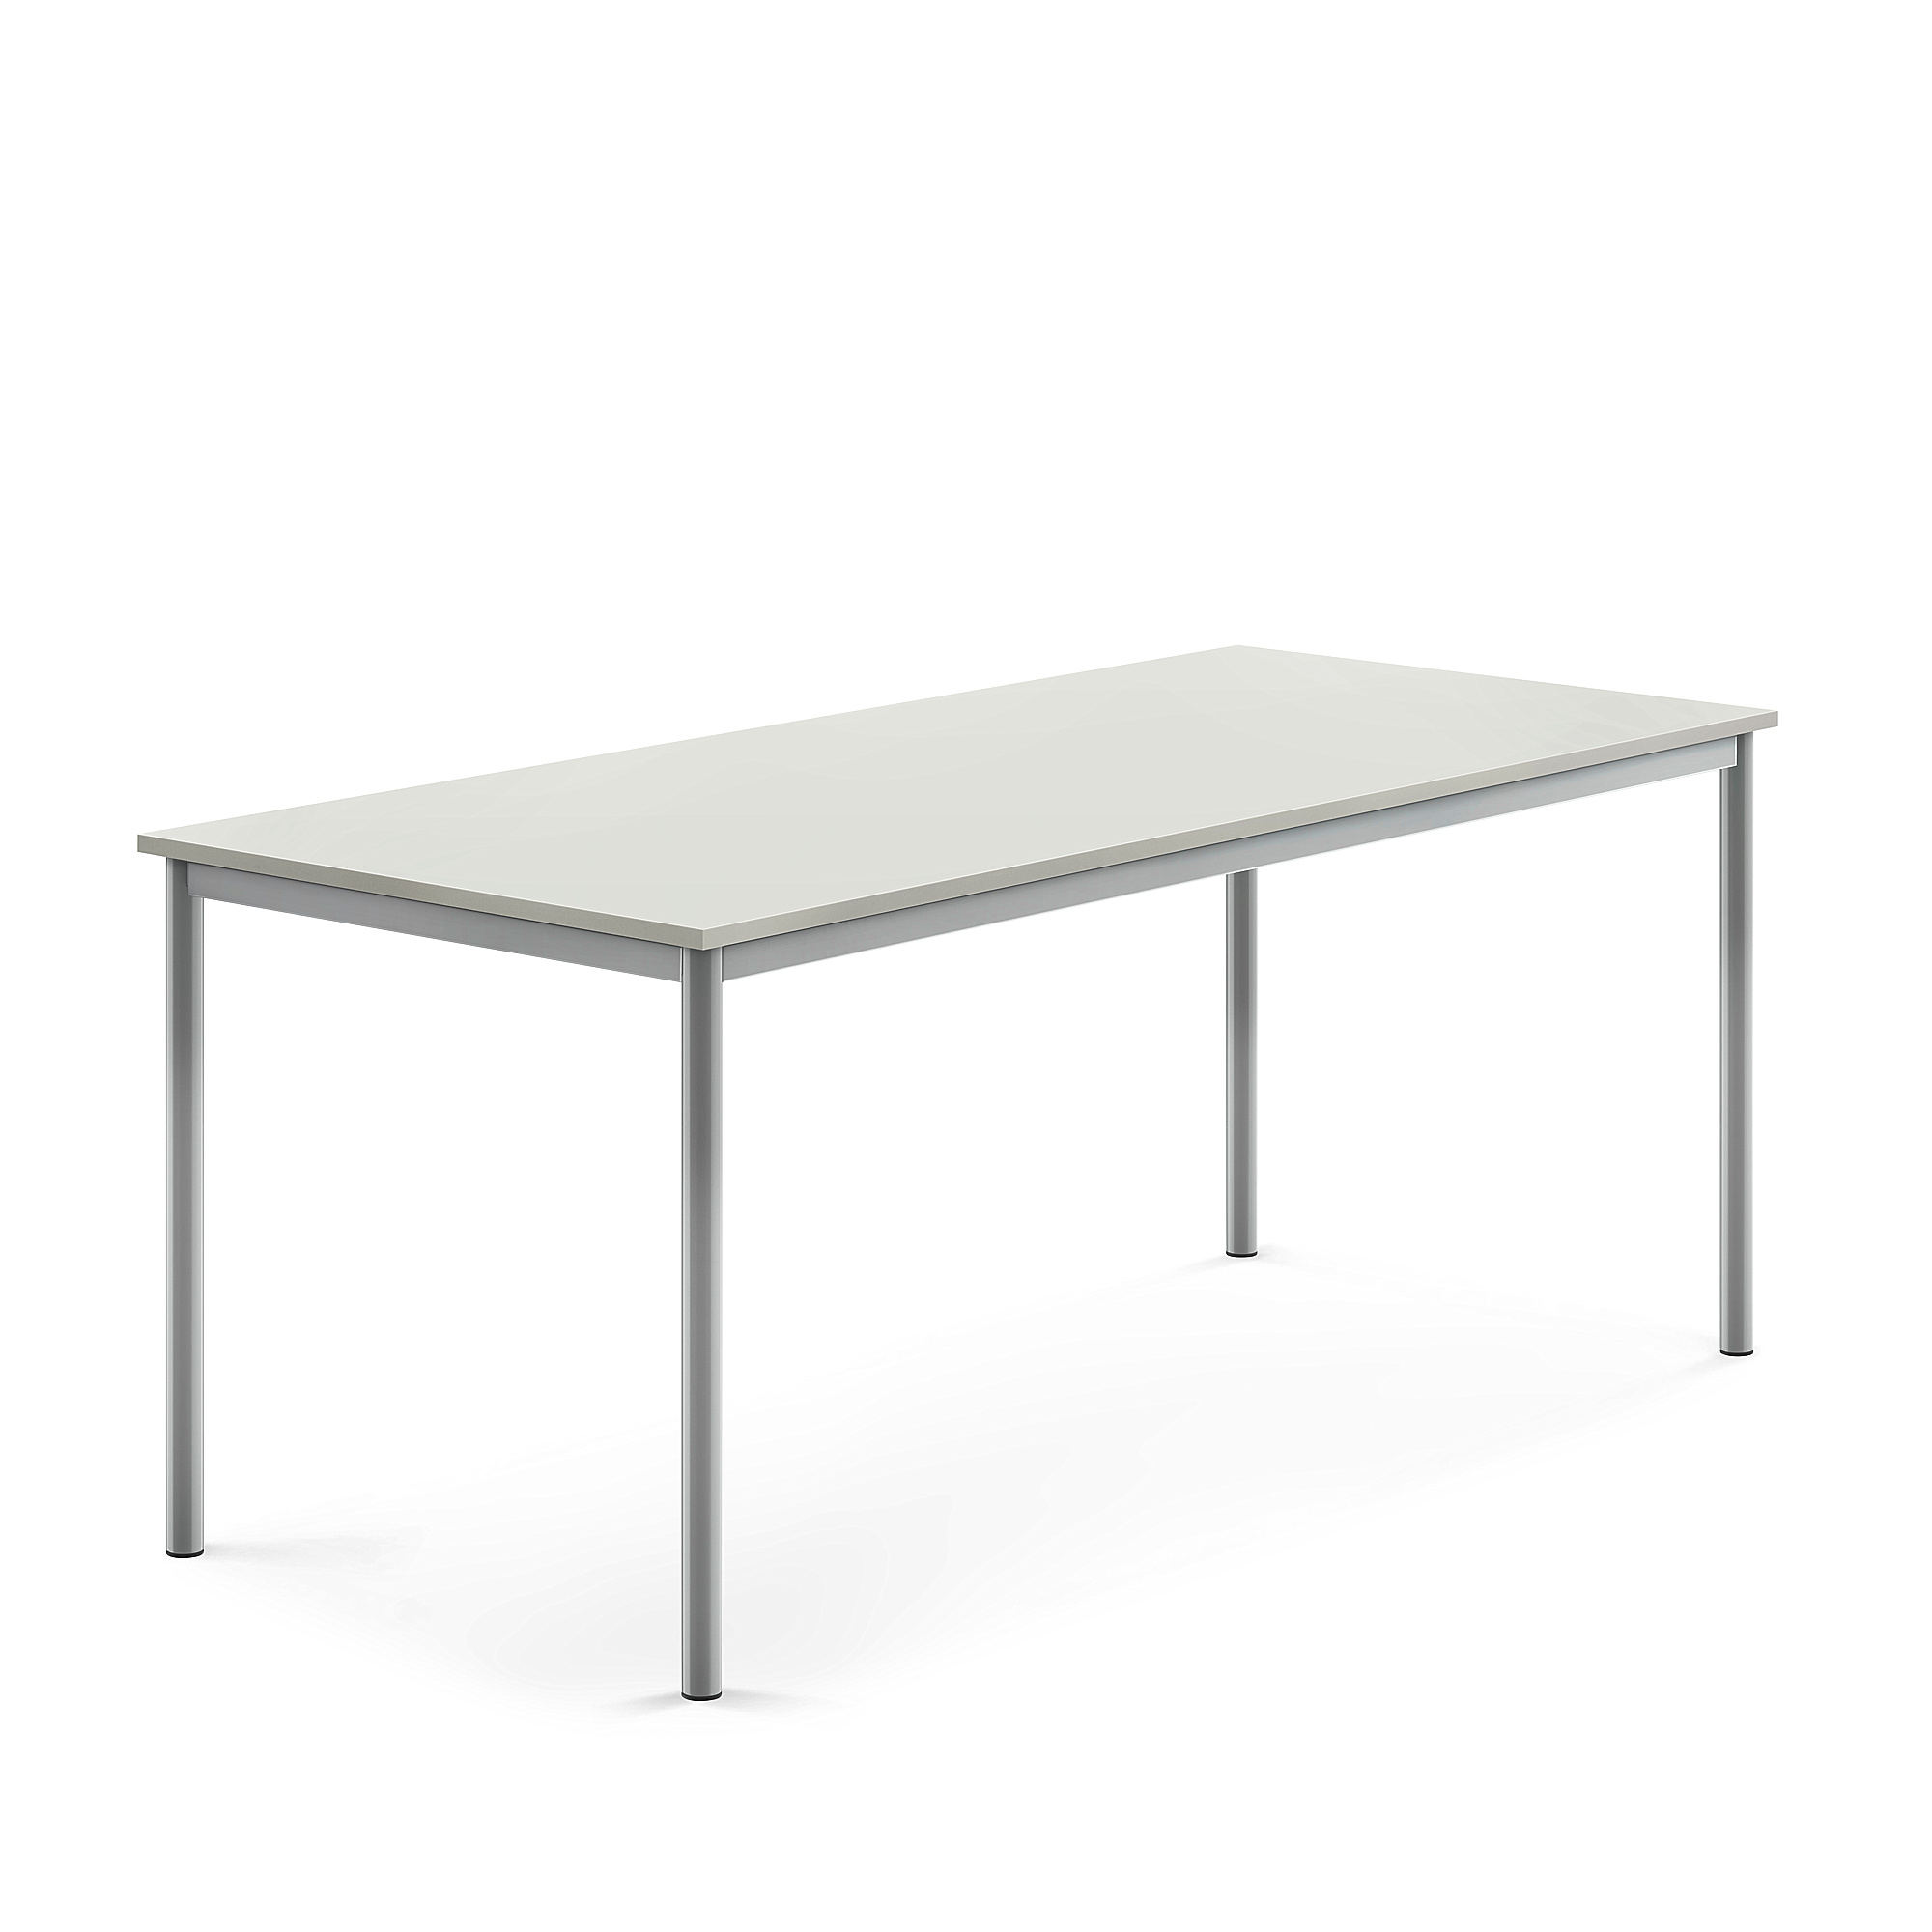 Stůl SONITUS, 1800x800x720 mm, stříbrné nohy, HPL deska tlumící hluk, šedá